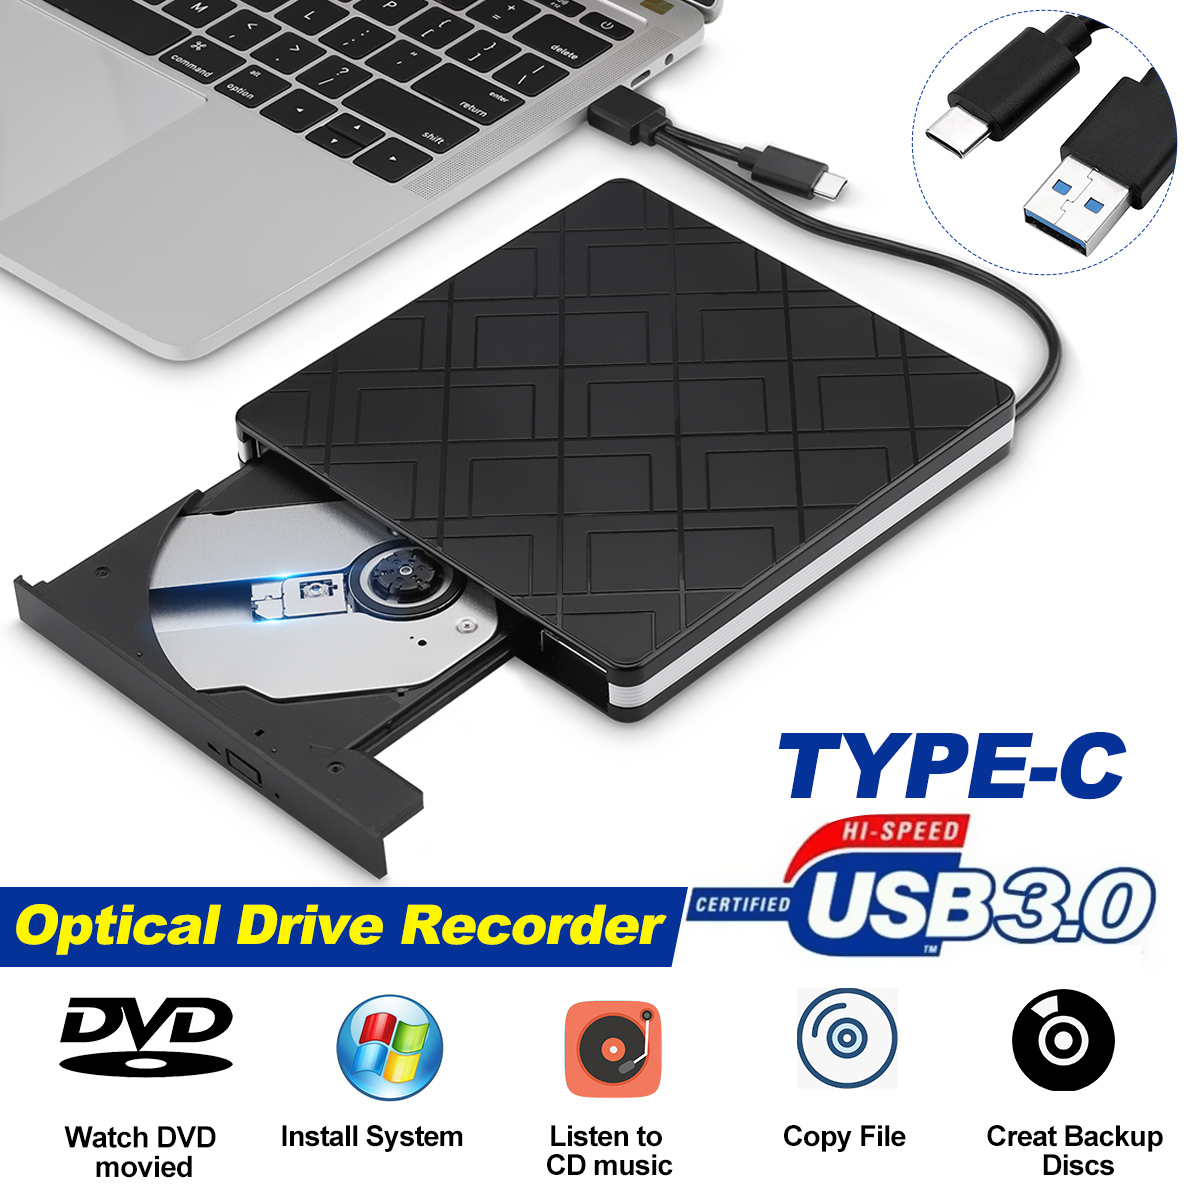 USB-C-External-Optical-Drive-USB-30-Type-C-DVD-RW-Player-CD-DVD-Burner-Writer-Rewriter-Data-Transfer-1753087-1